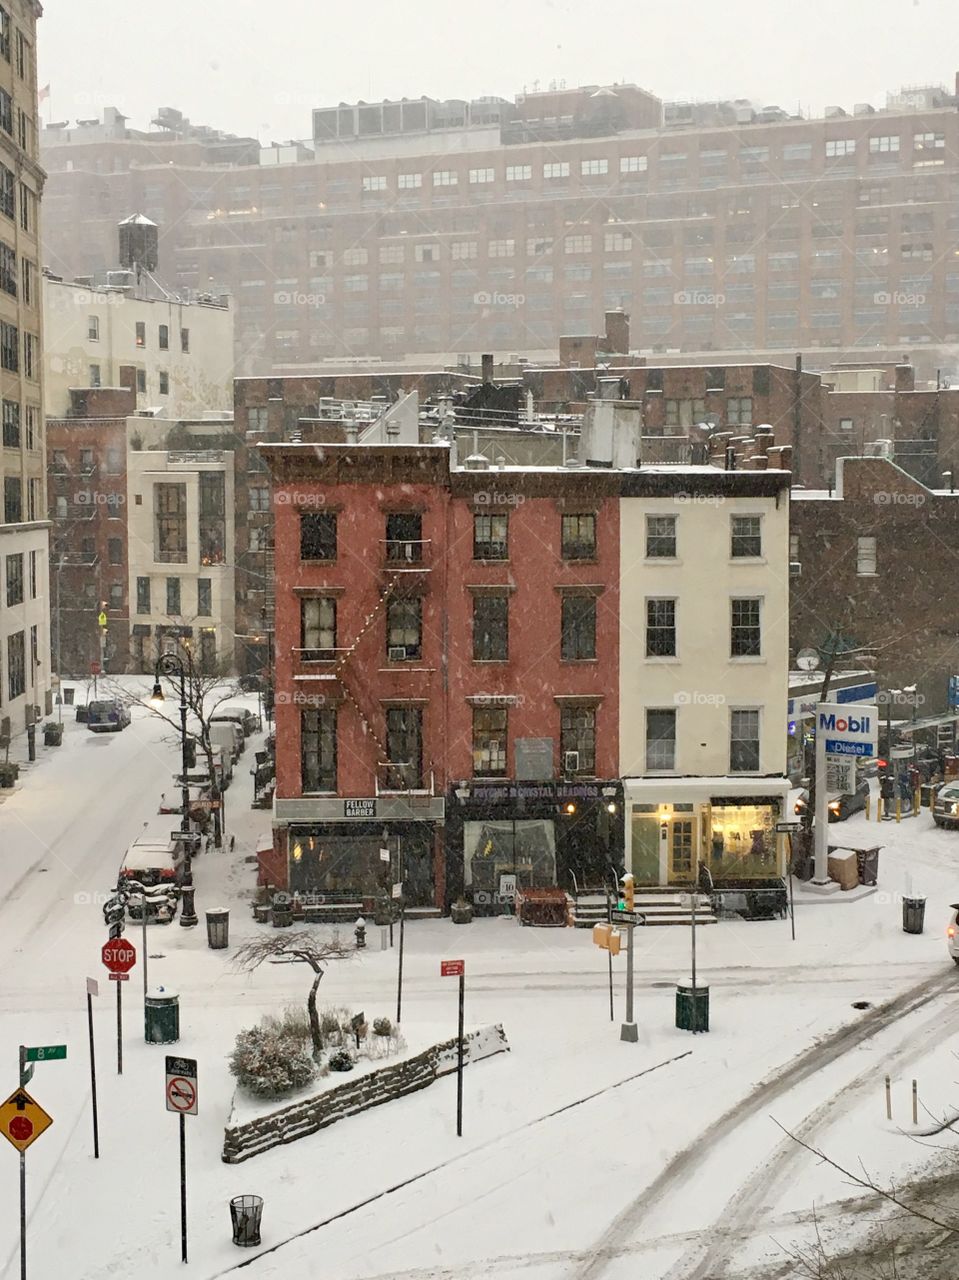 First Snowfall ❄️ 
West Village, New York 